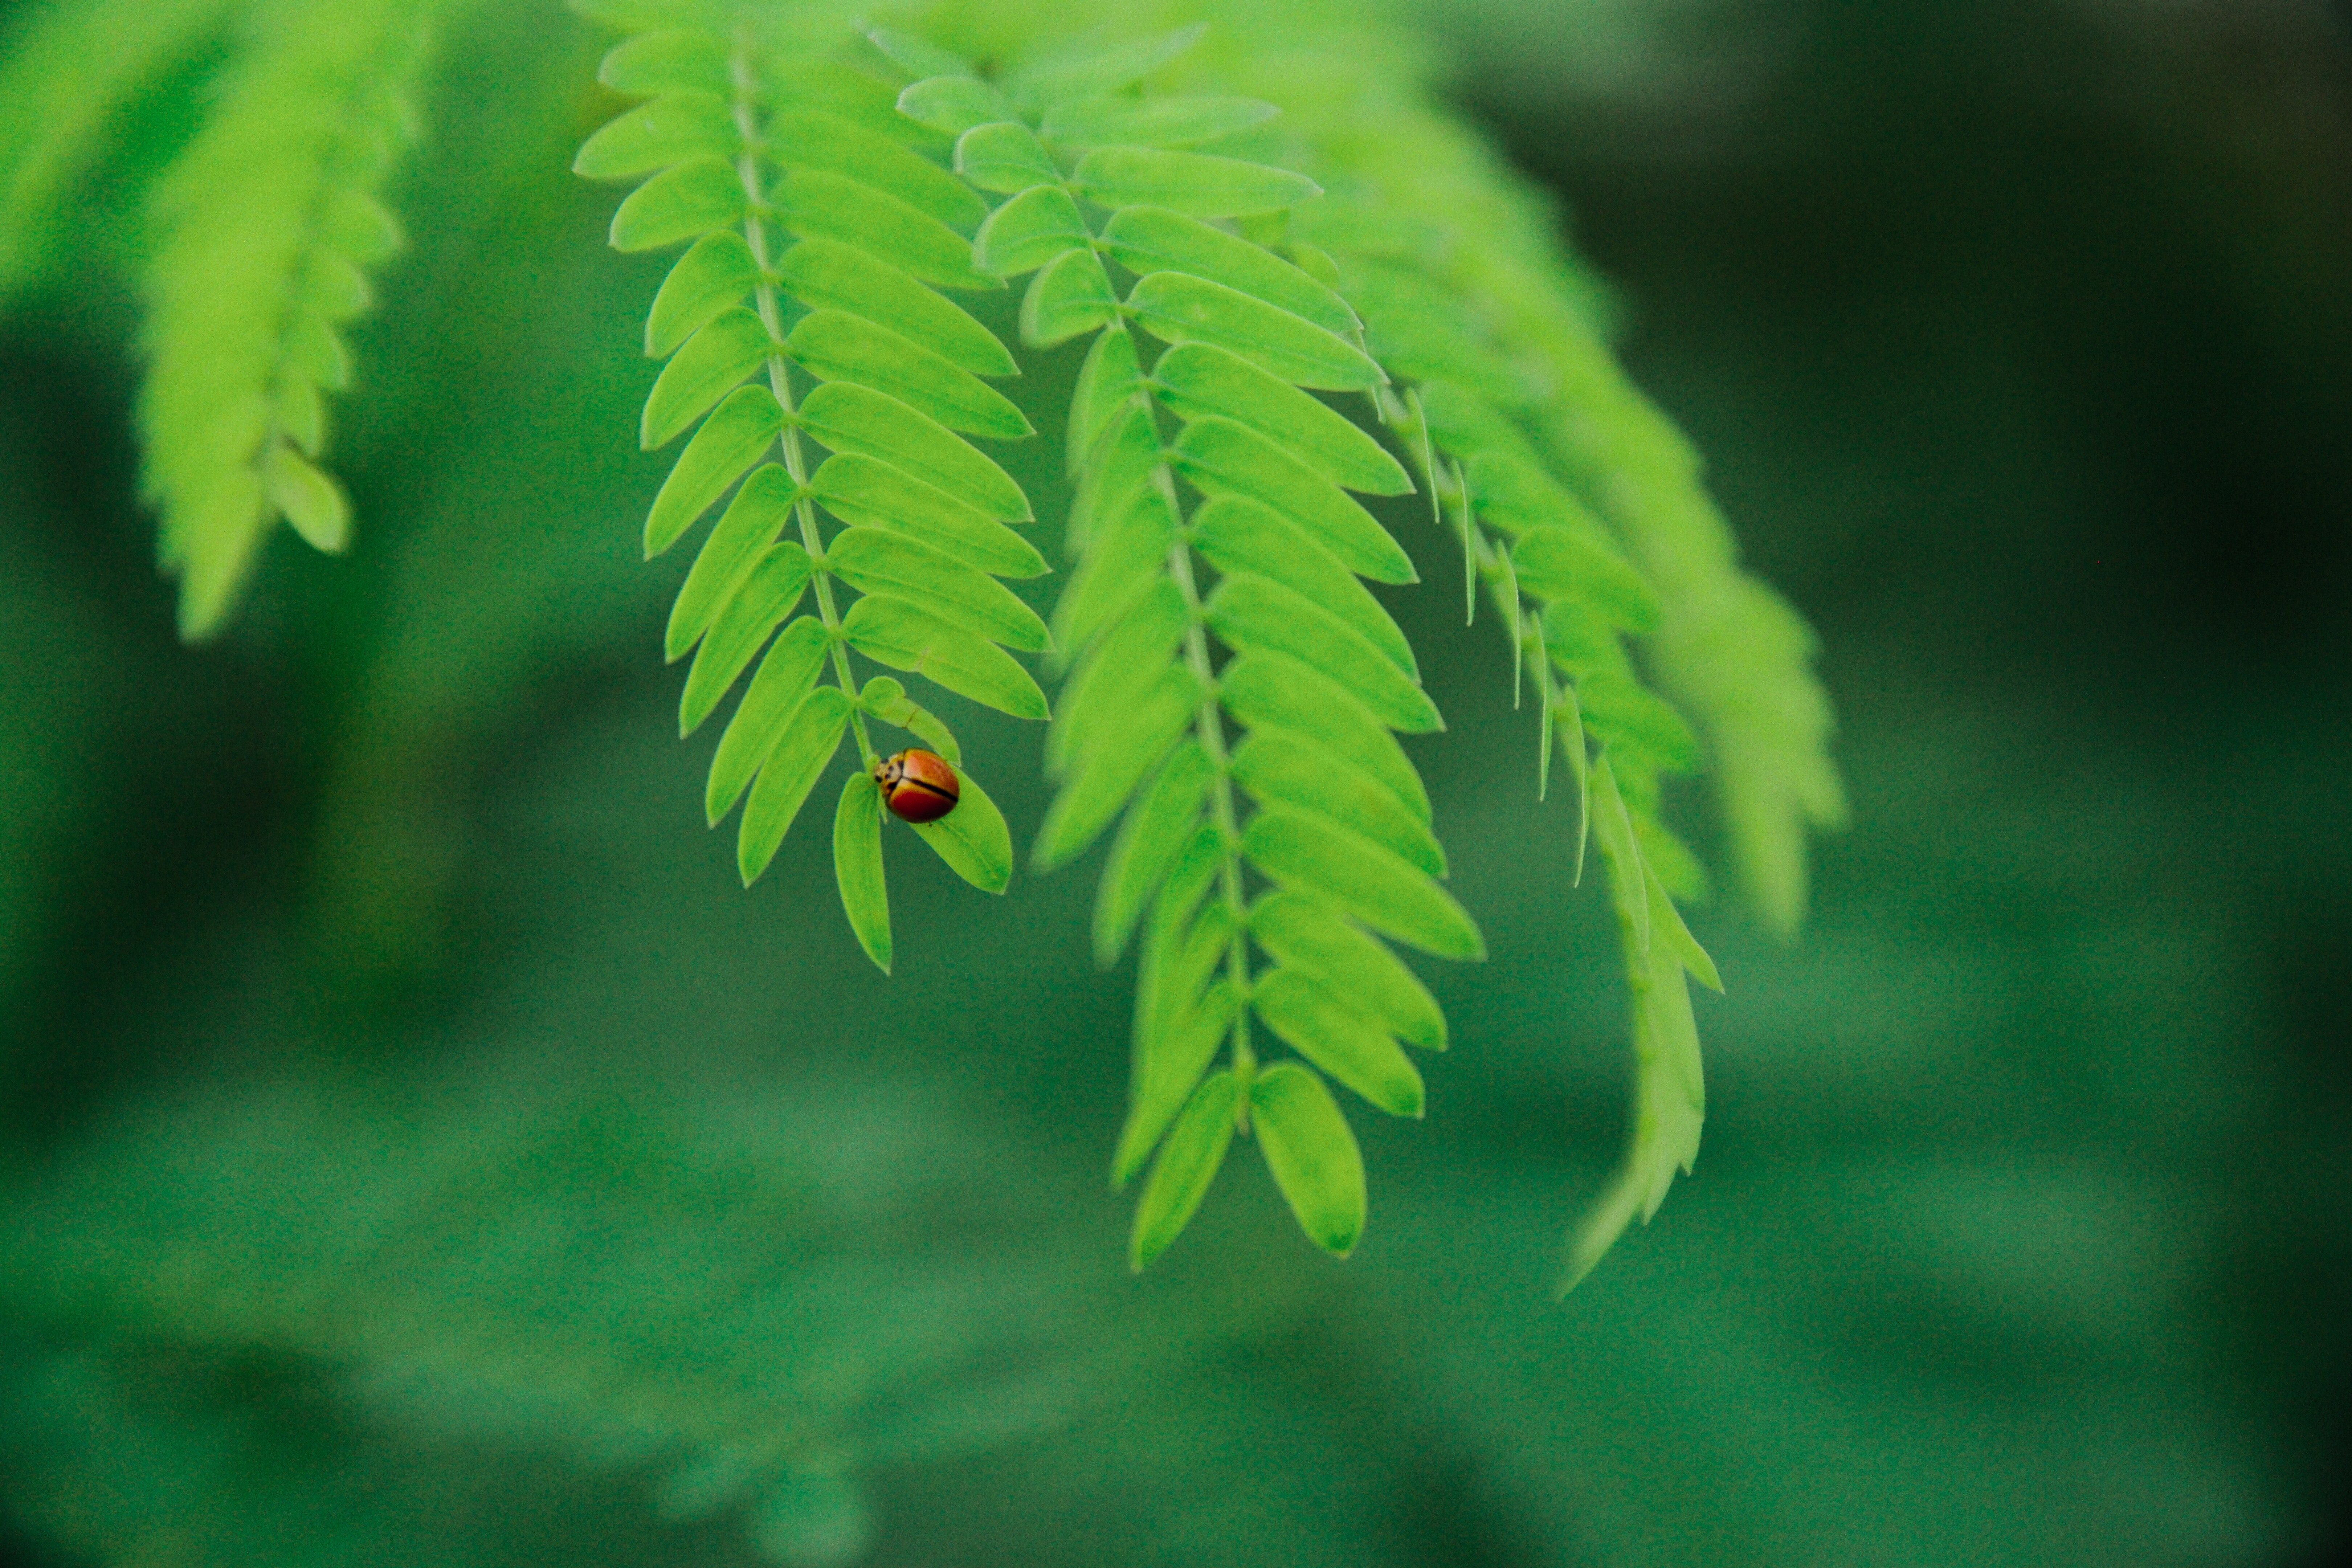 Selevtive focus photo of ladybug on green leaf during daytime